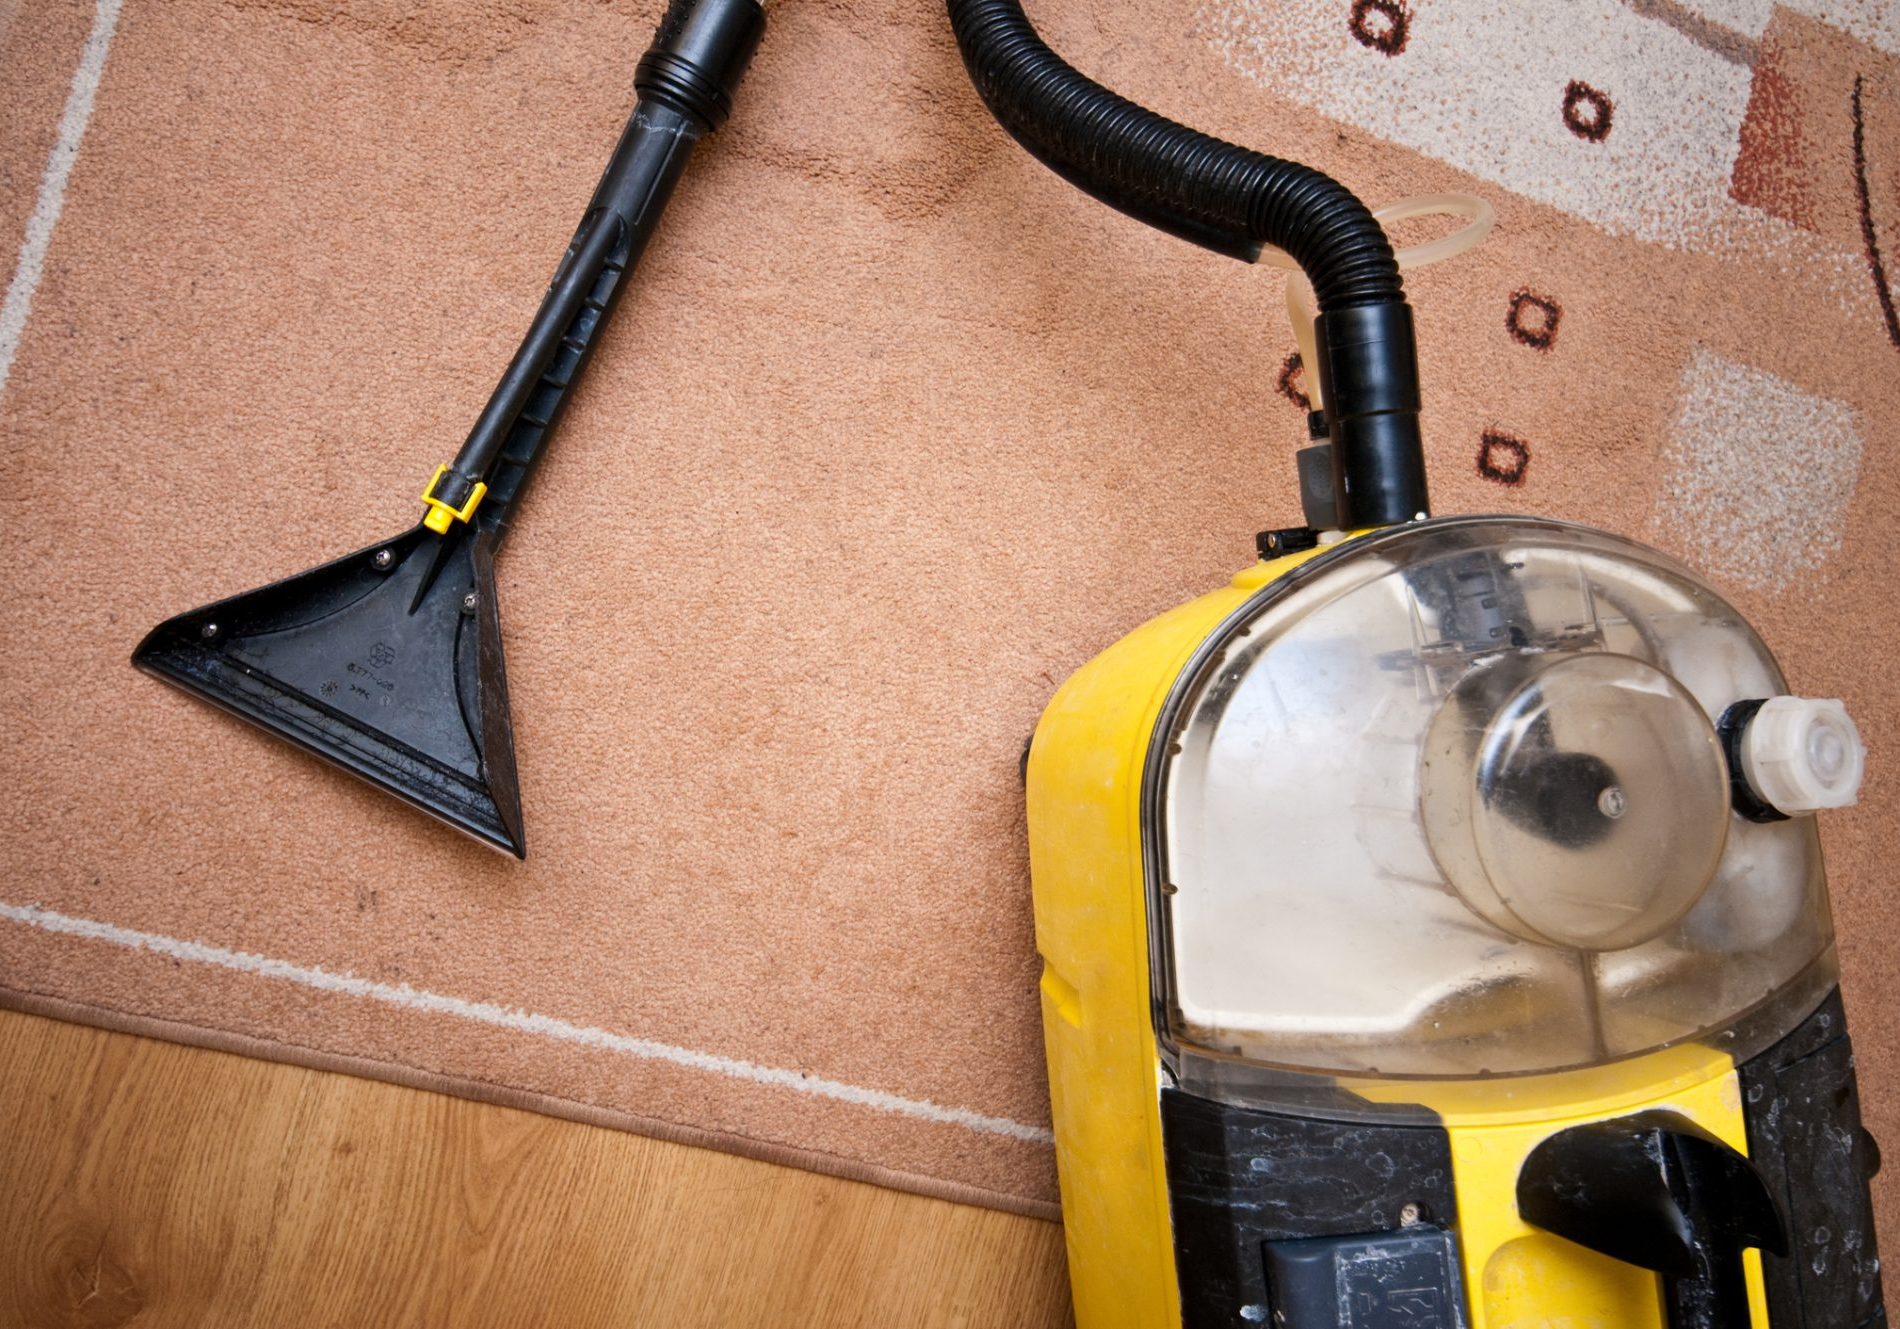 A professional carpet cleaning machine close up.